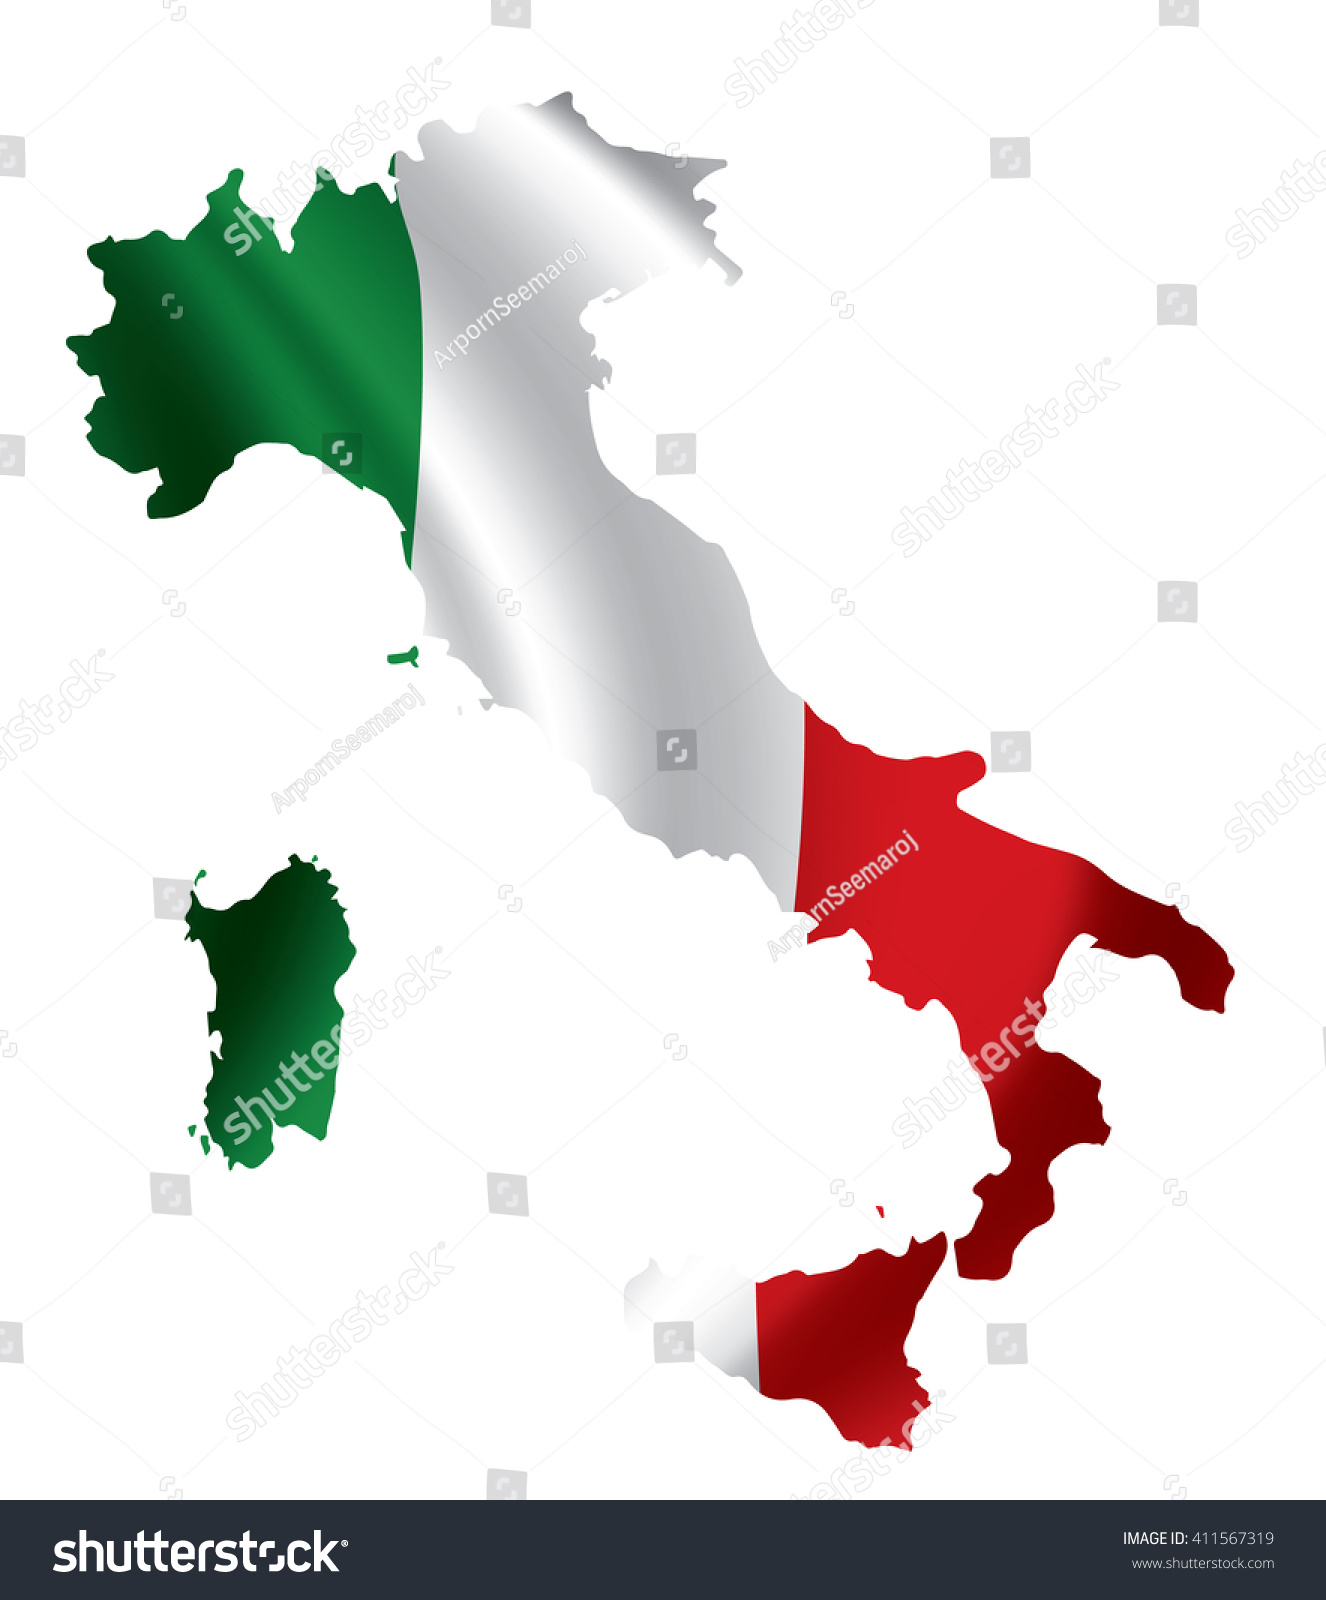 Vector Italy Flag Map - 411567319 : Shutterstock